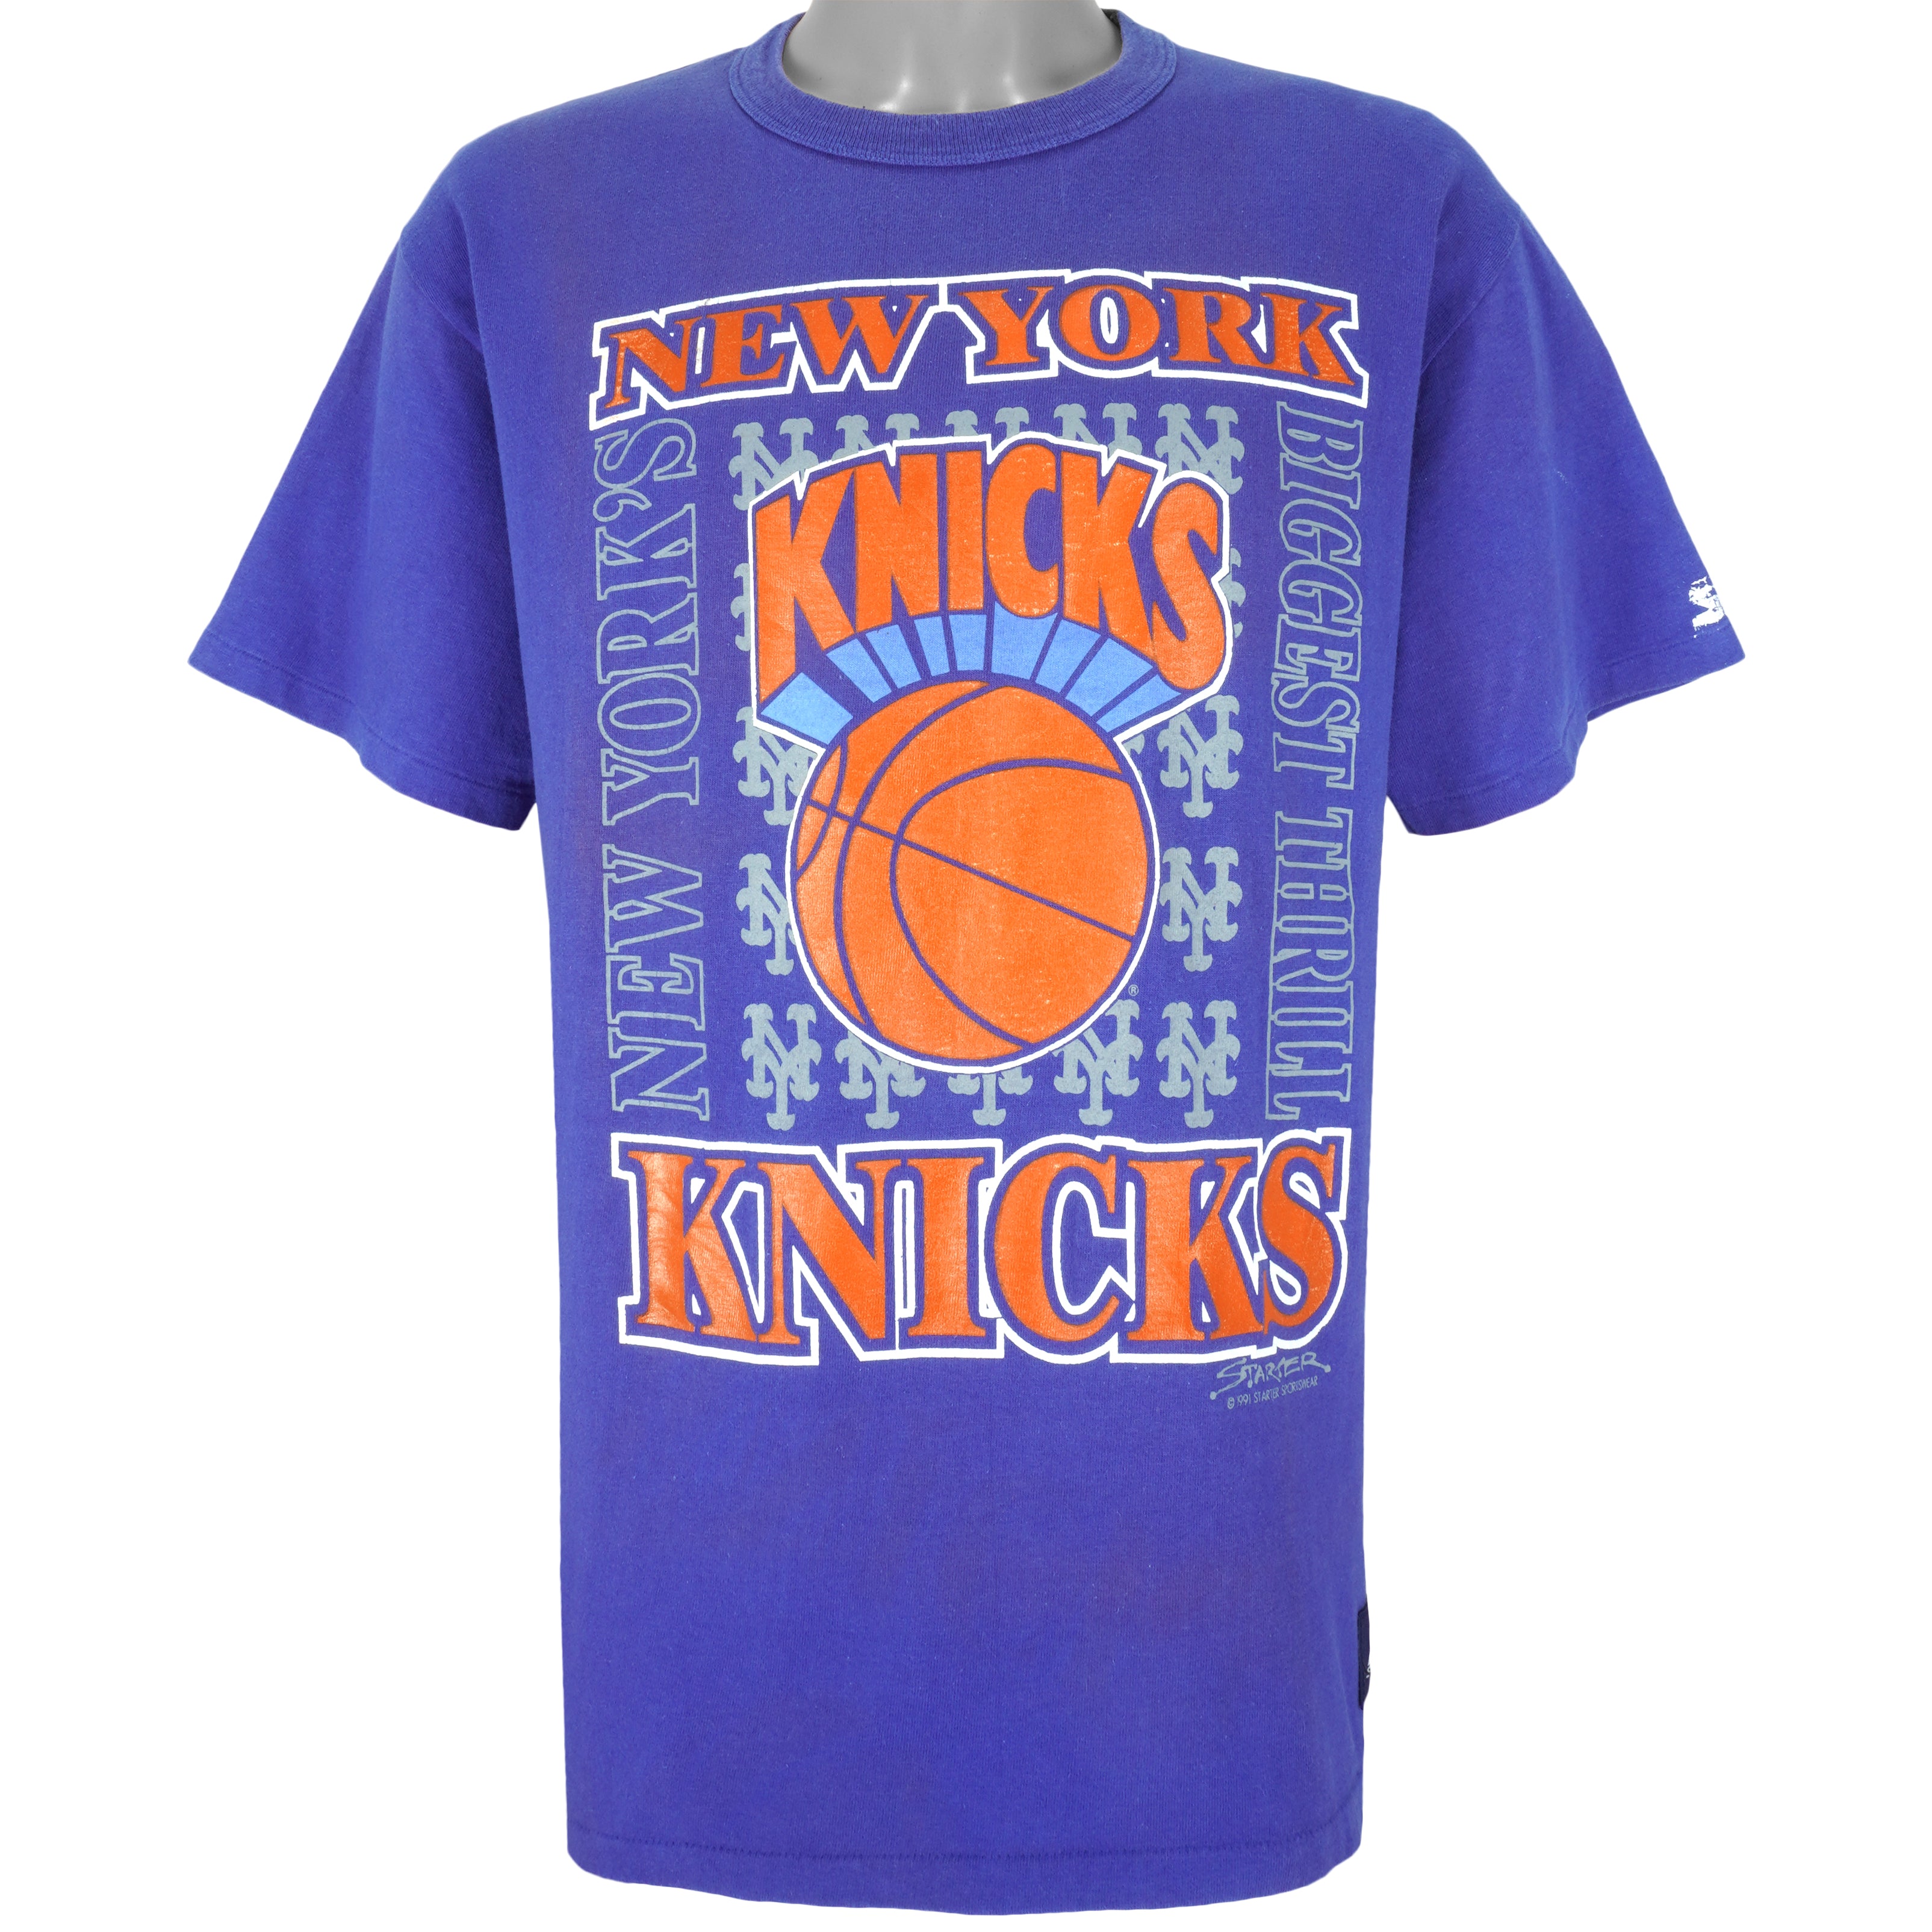 Vintage Starter - New York Knicks Crew Neck Sweatshirt 1990s Large